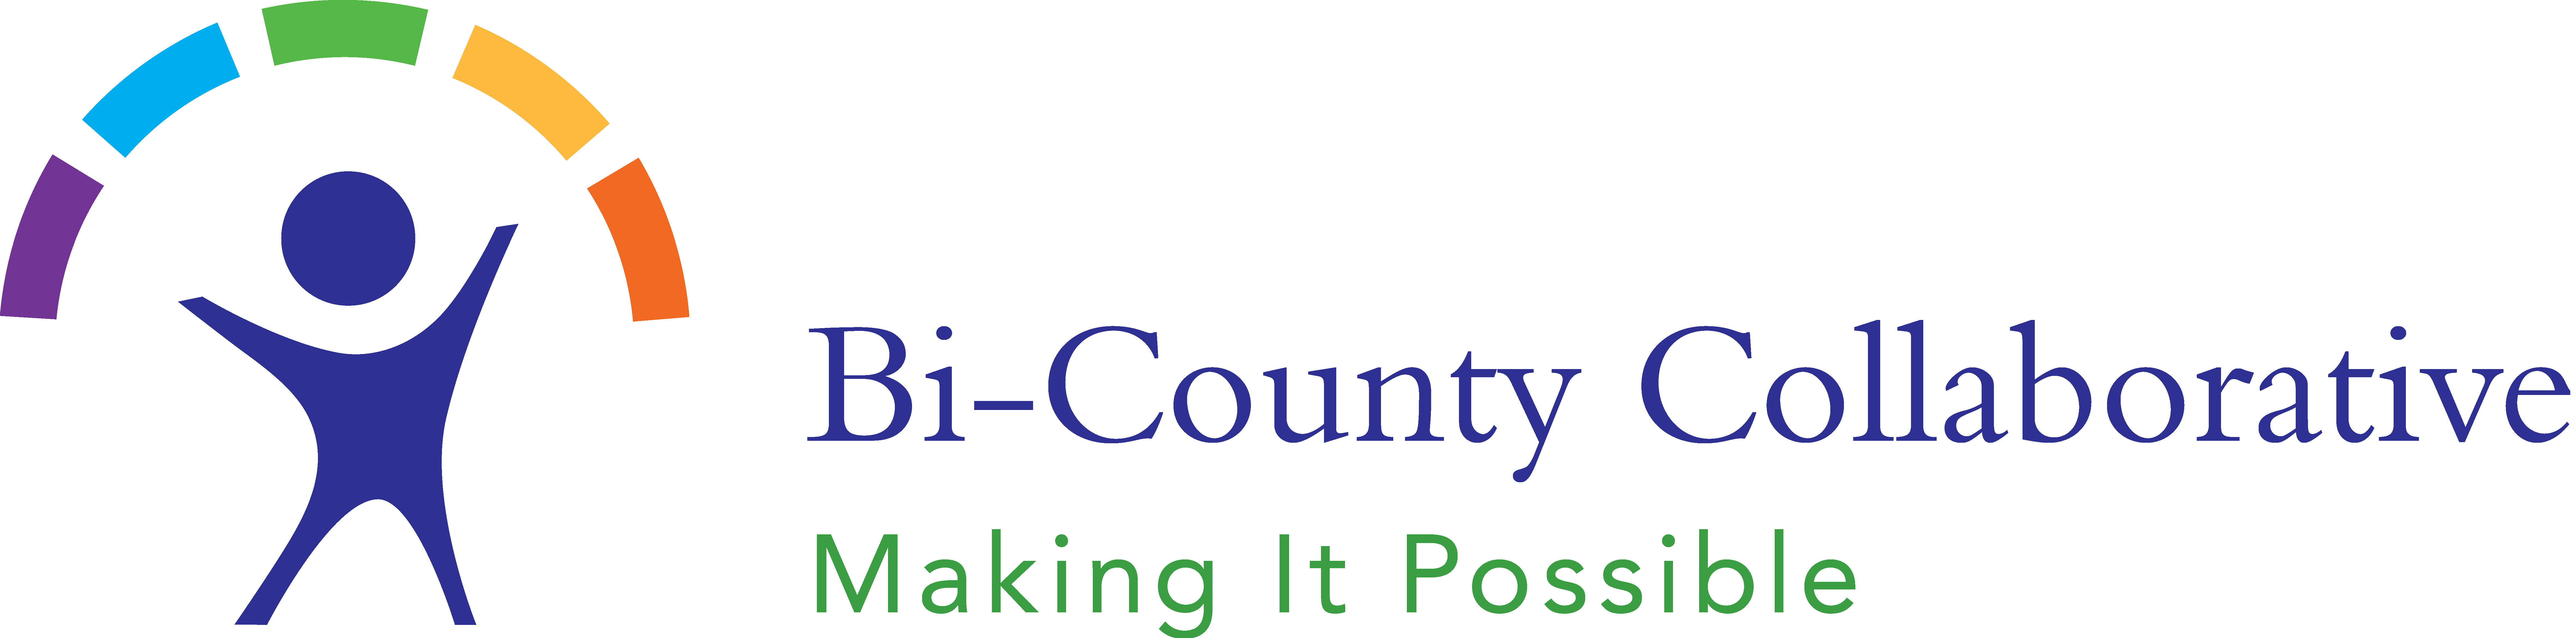 Bi-County Collaborative's Logo